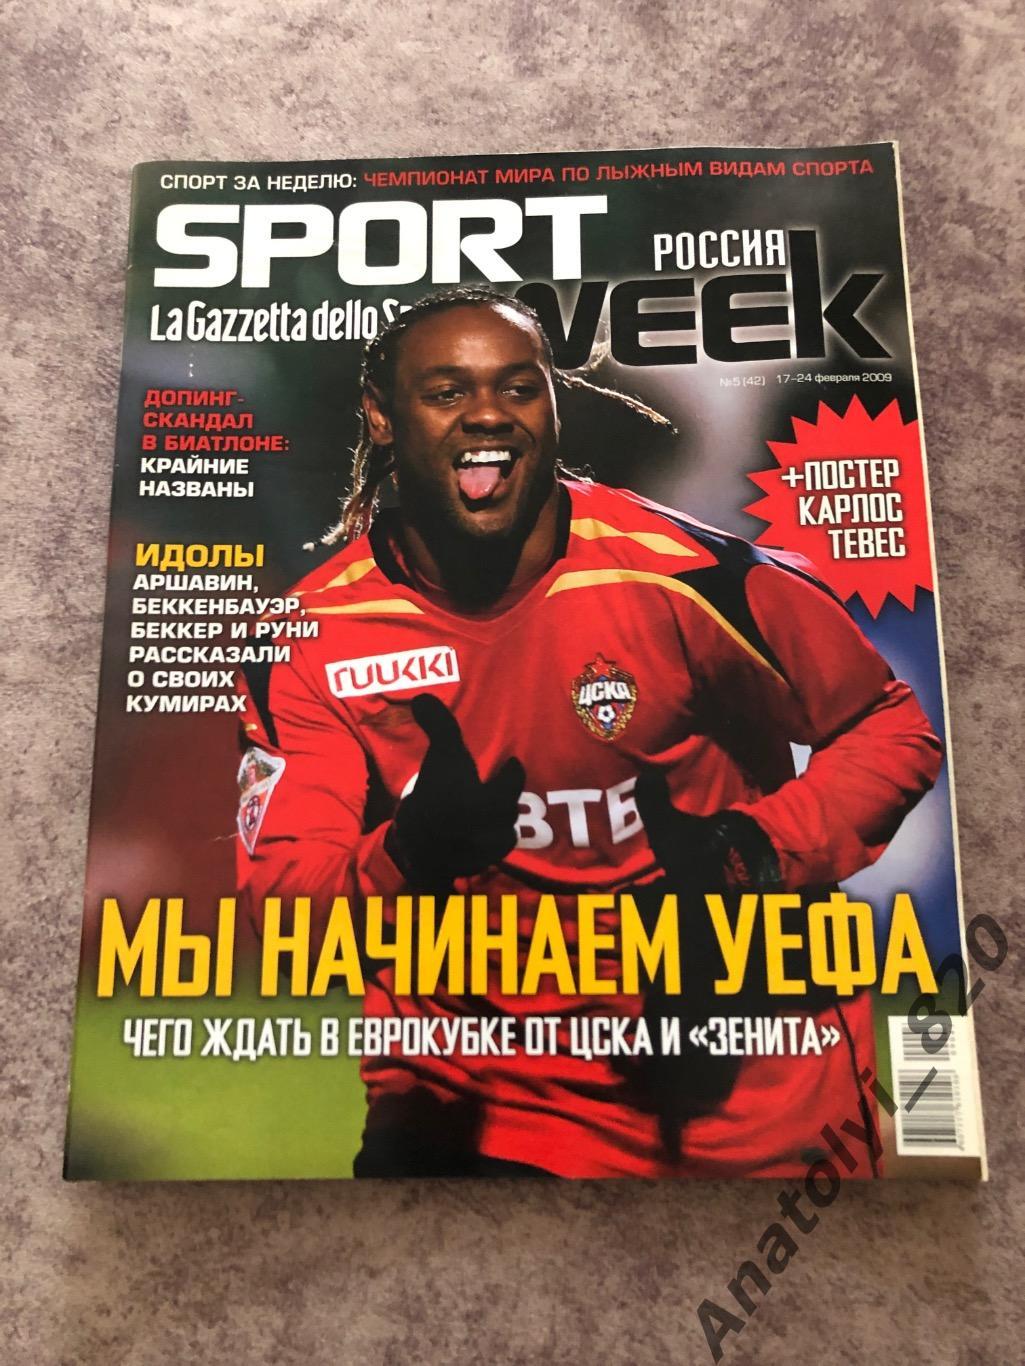 Журнал «Sport week” Россия 2009 год, номер 5